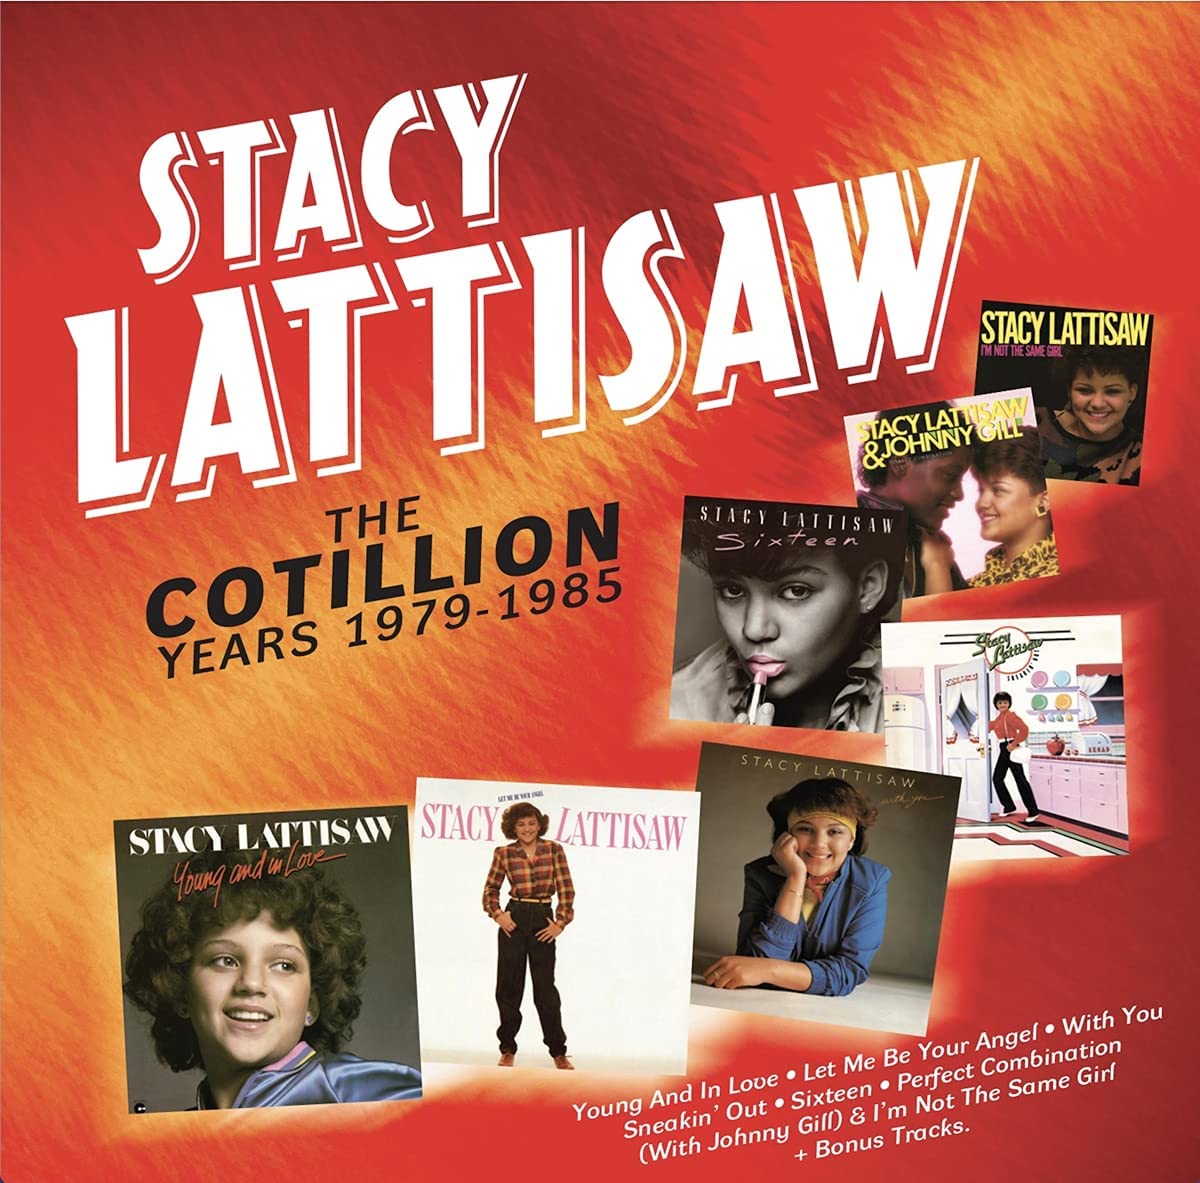 7CD - Stacy Lattislaw - Cotillion Years 1979-1985